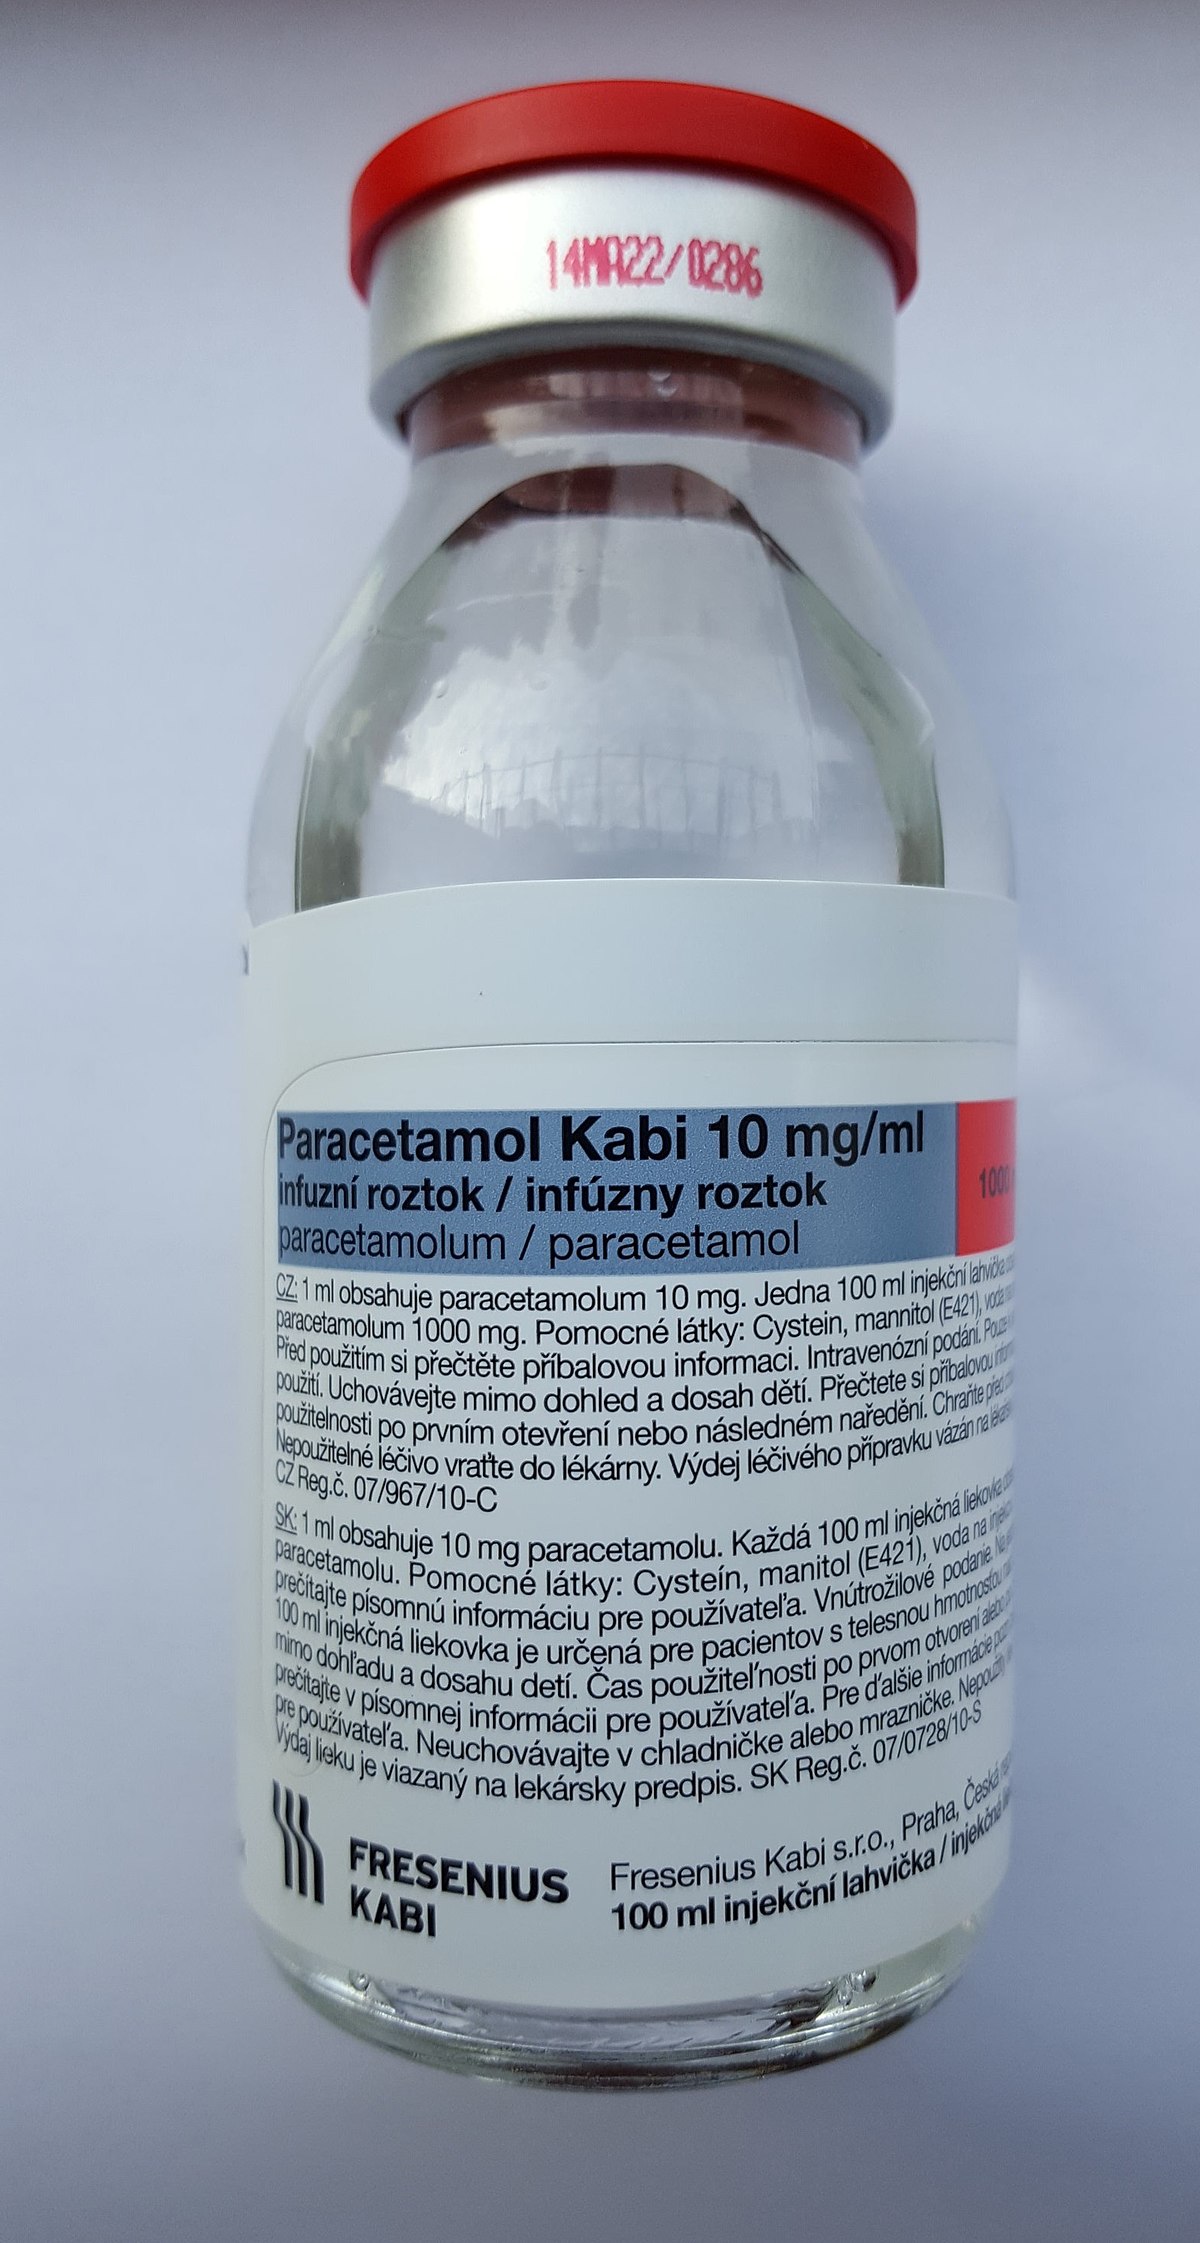 File:Paracetamol 10mg-ml white background.jpg - Wikimedia Commons